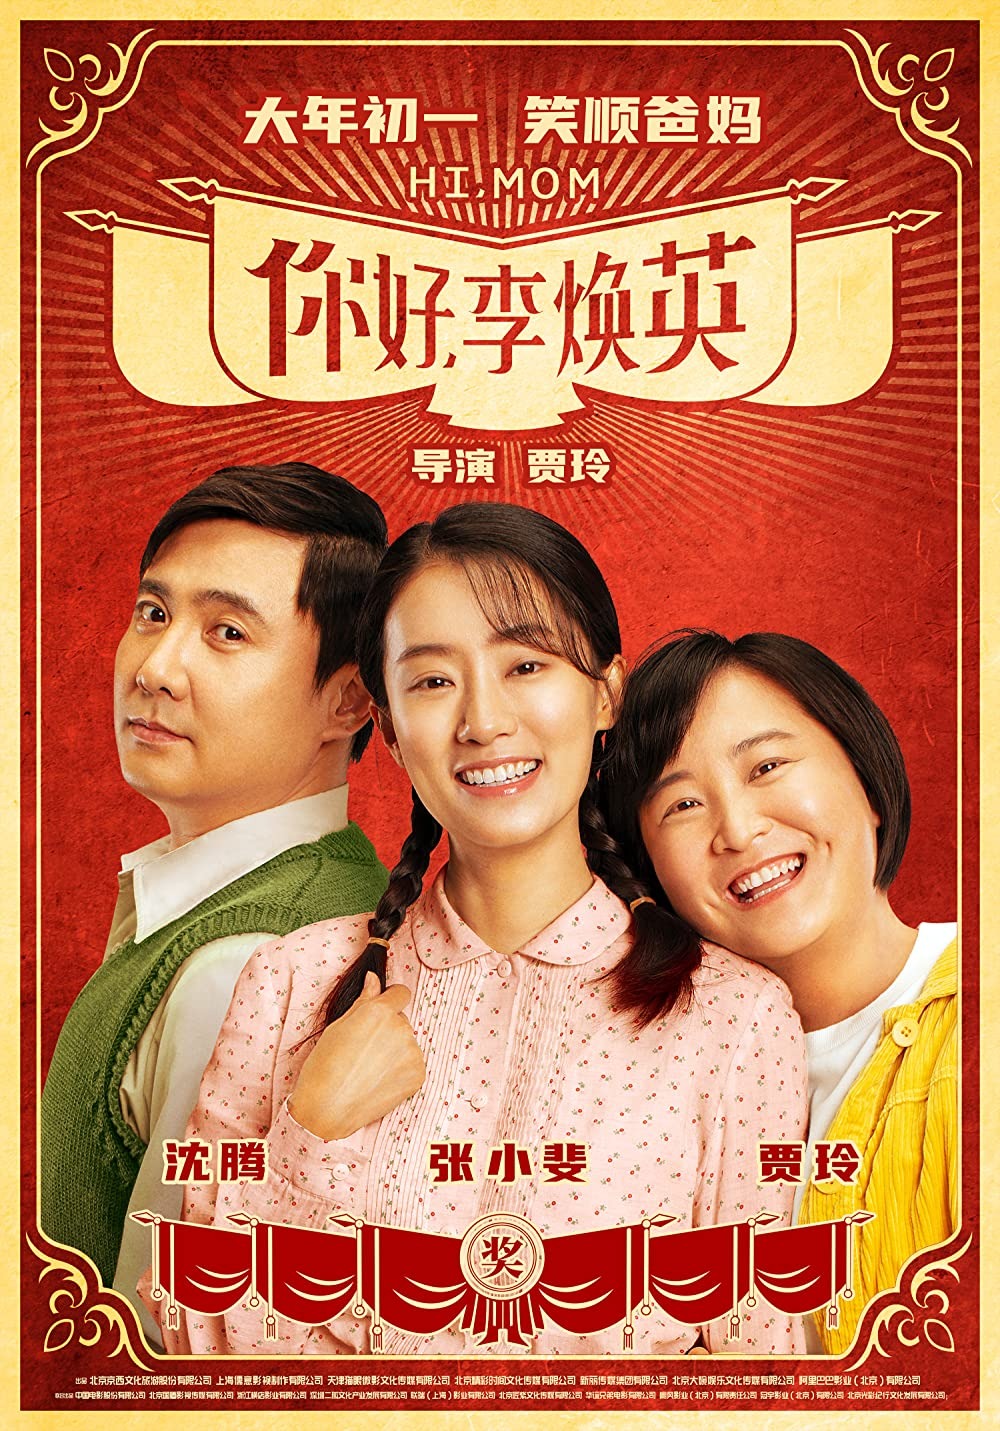 Extra Large Movie Poster Image for Ni hao, Li Huan Ying 